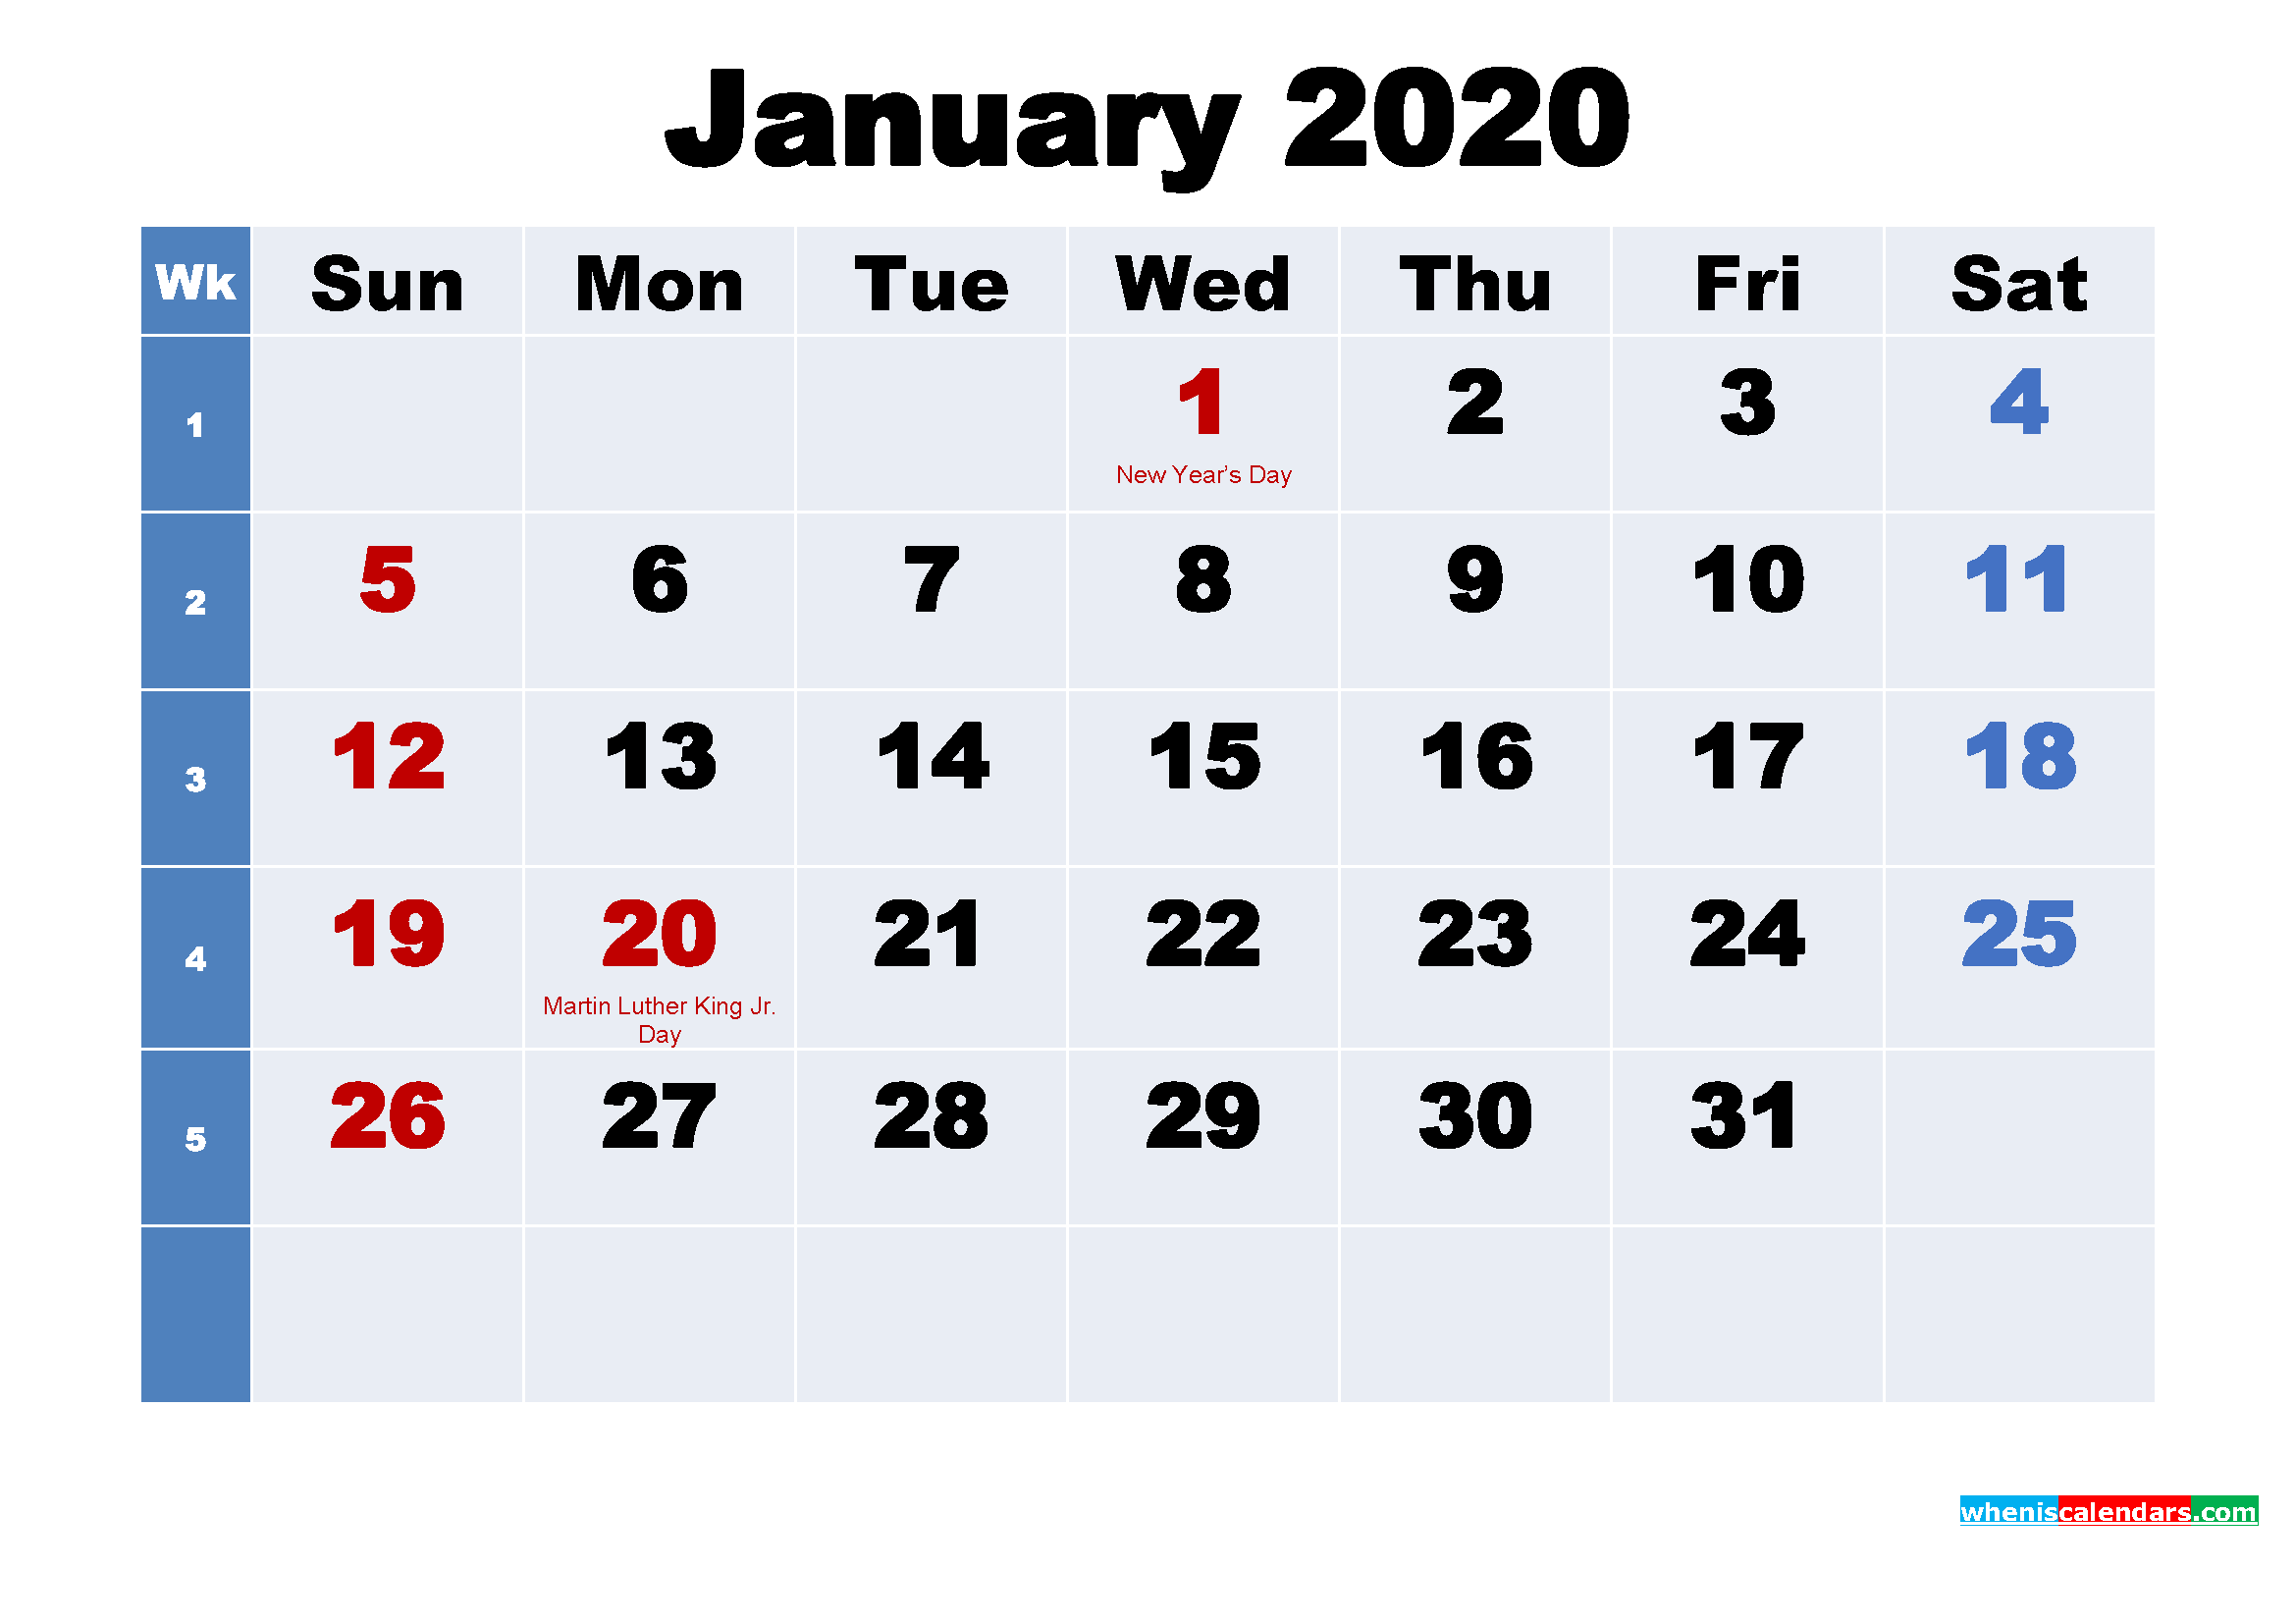 Free 2020 Printable Calendar January as Word, PDF